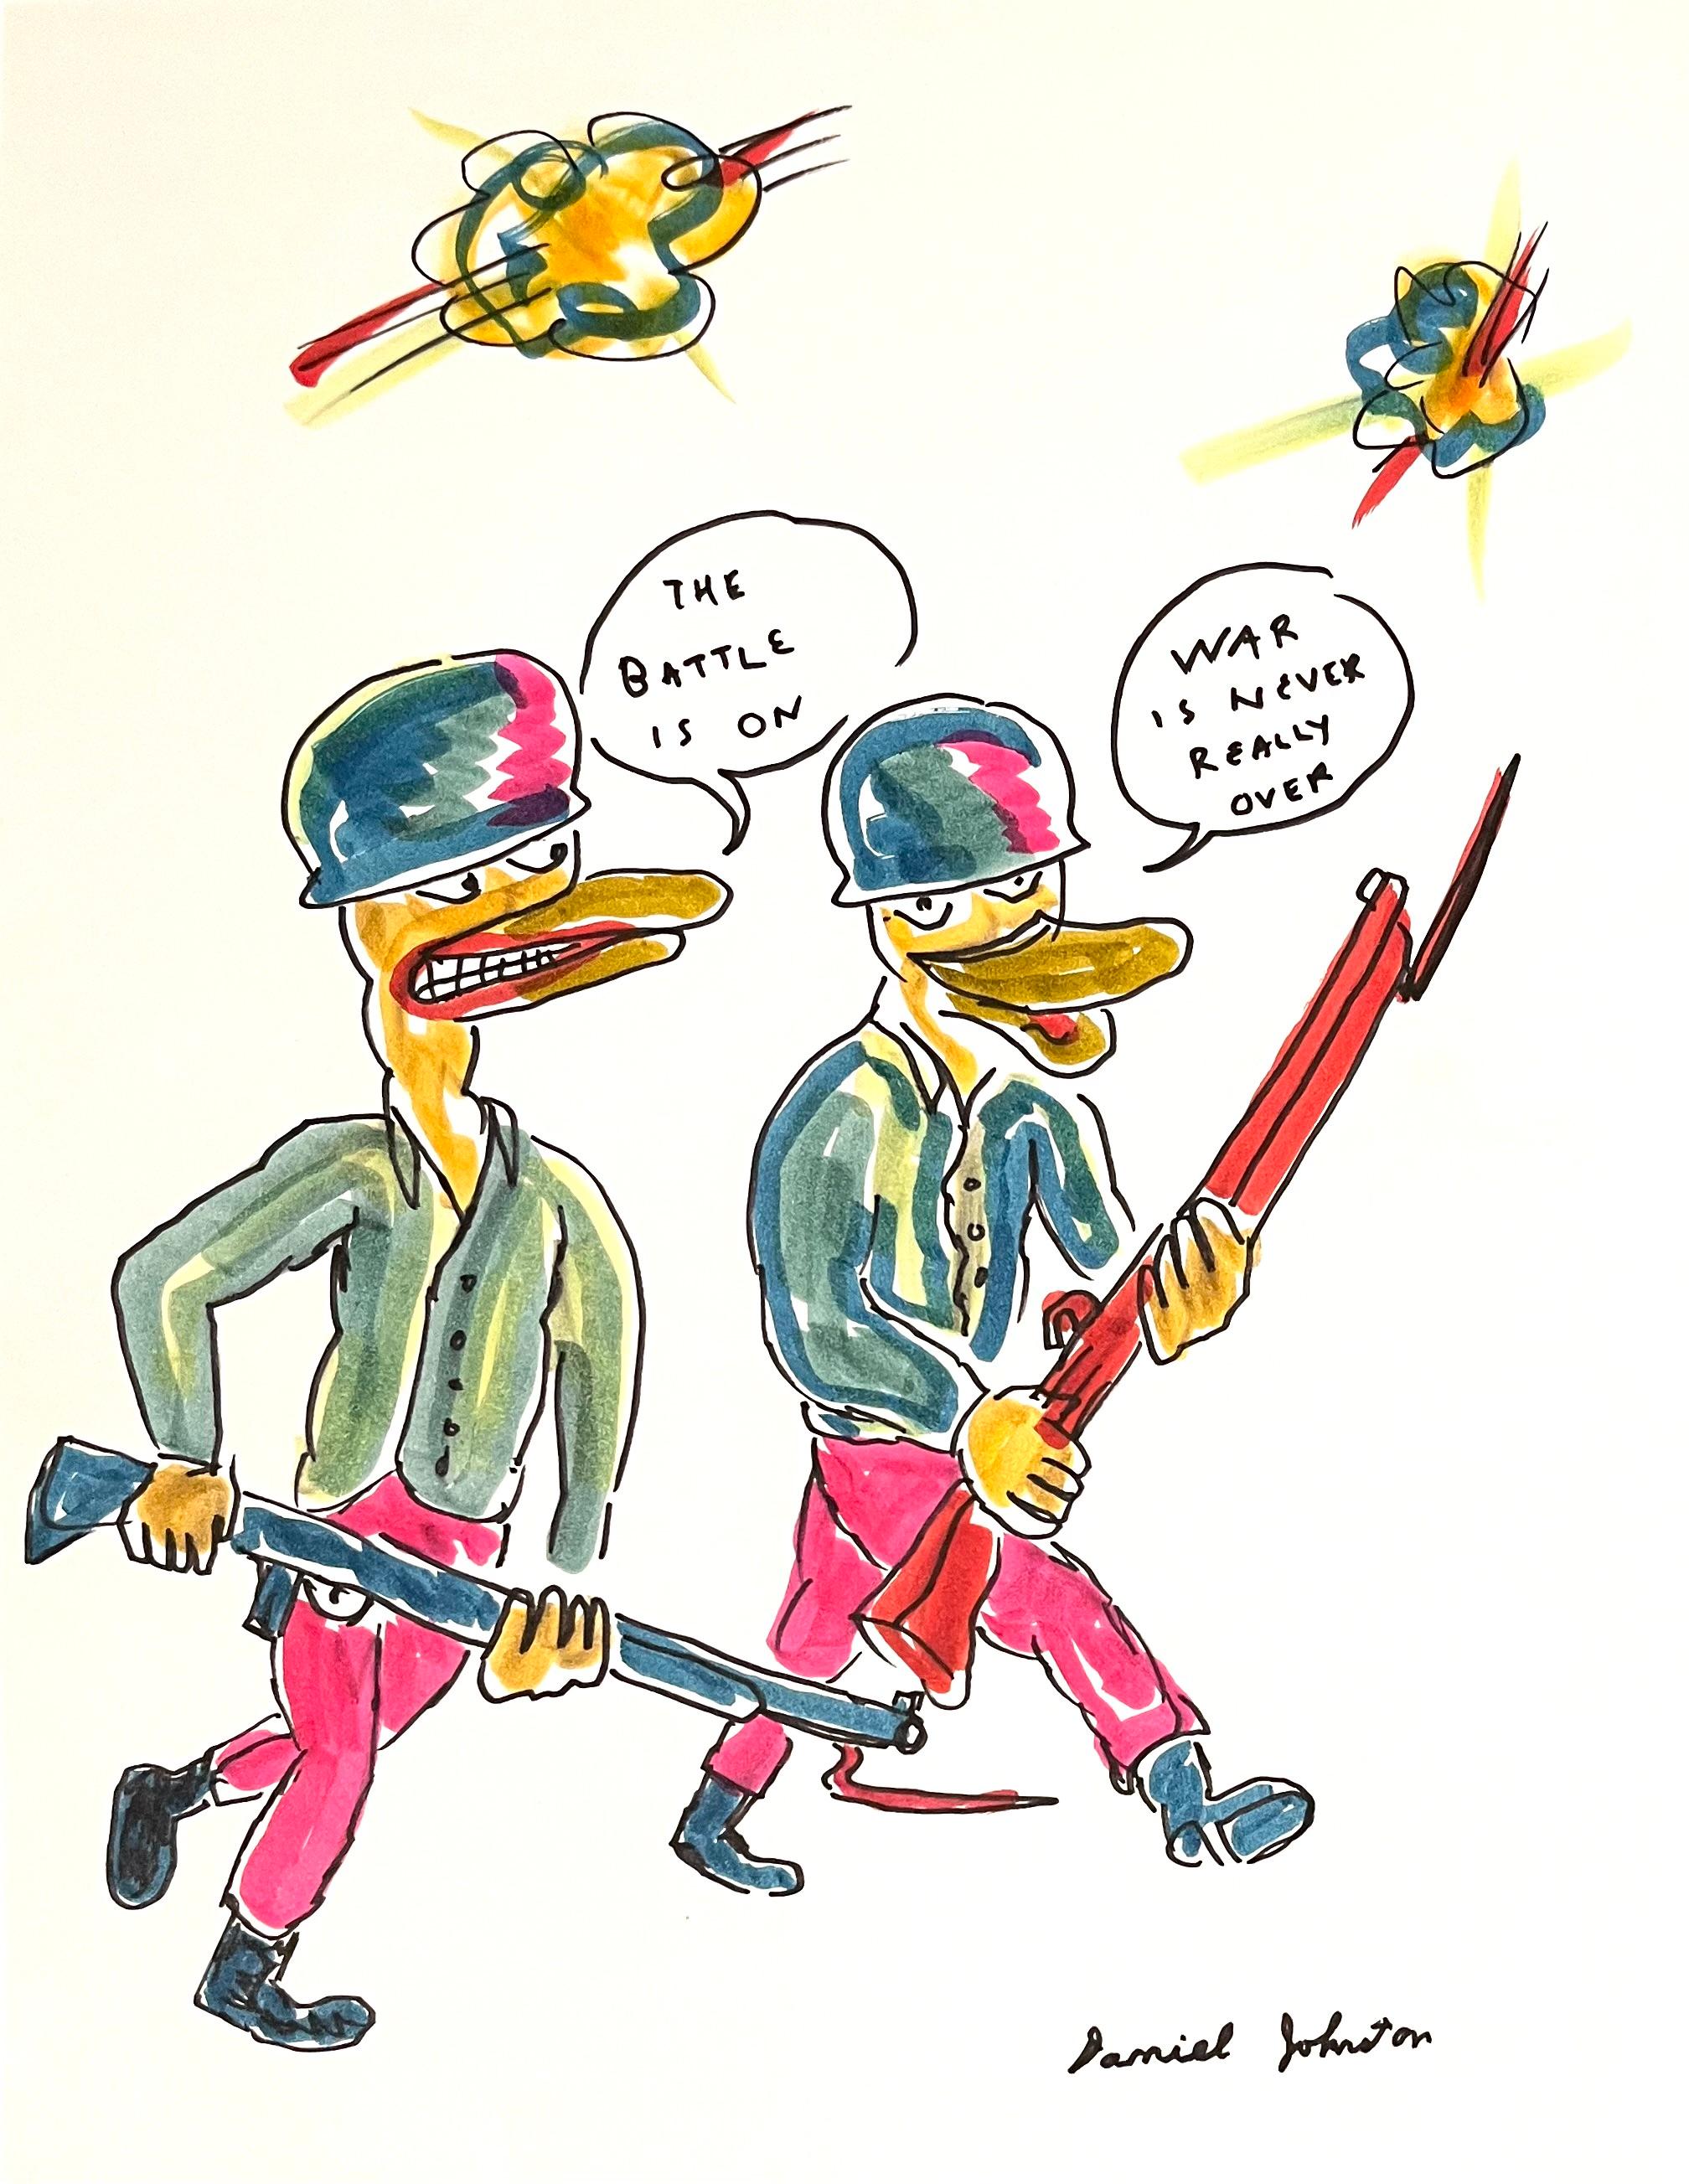 Daniel Johnston Figurative Art - The Battle is On - Figure Ink Drawing on Paper, Outsider Art, Duck Wars Series